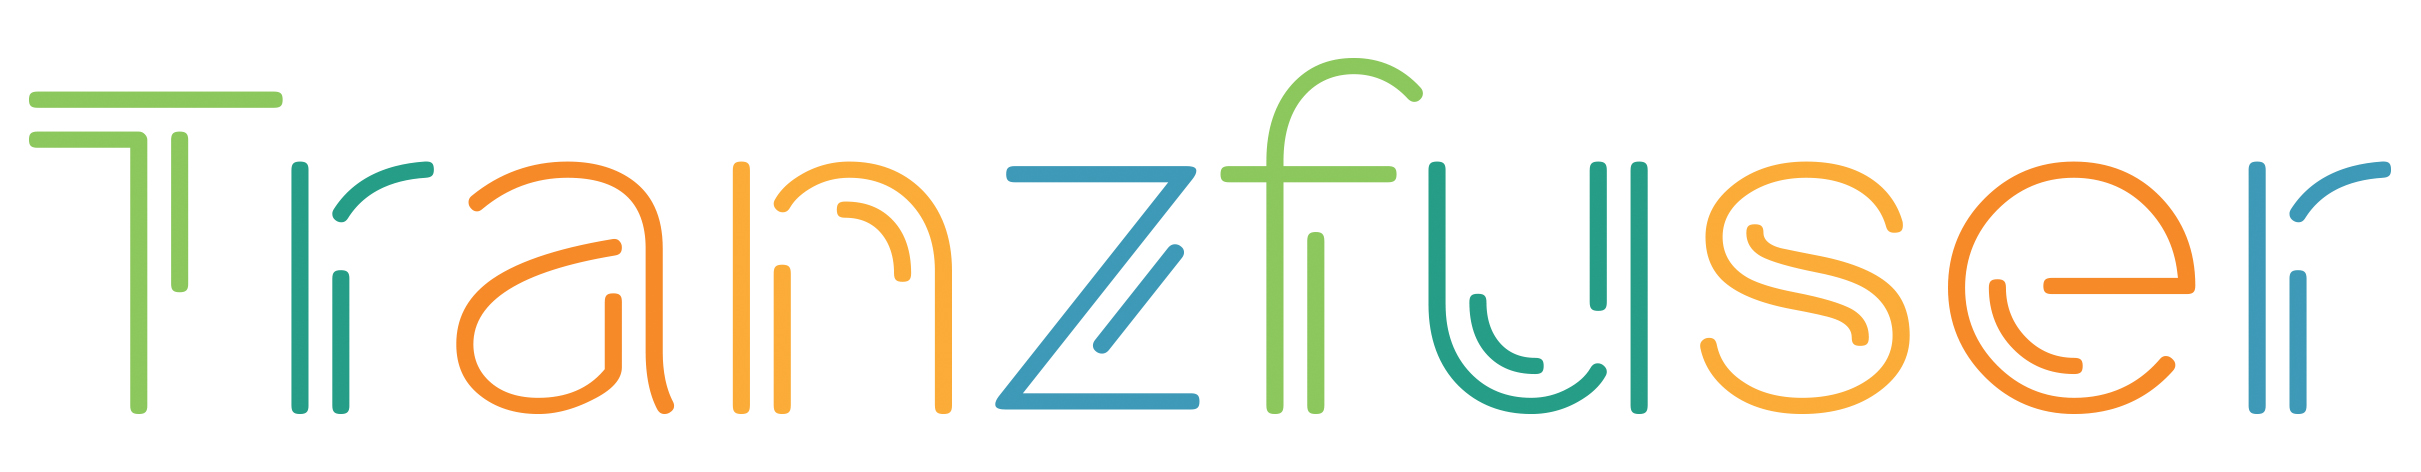 tranzfuser_Logo_CMYK